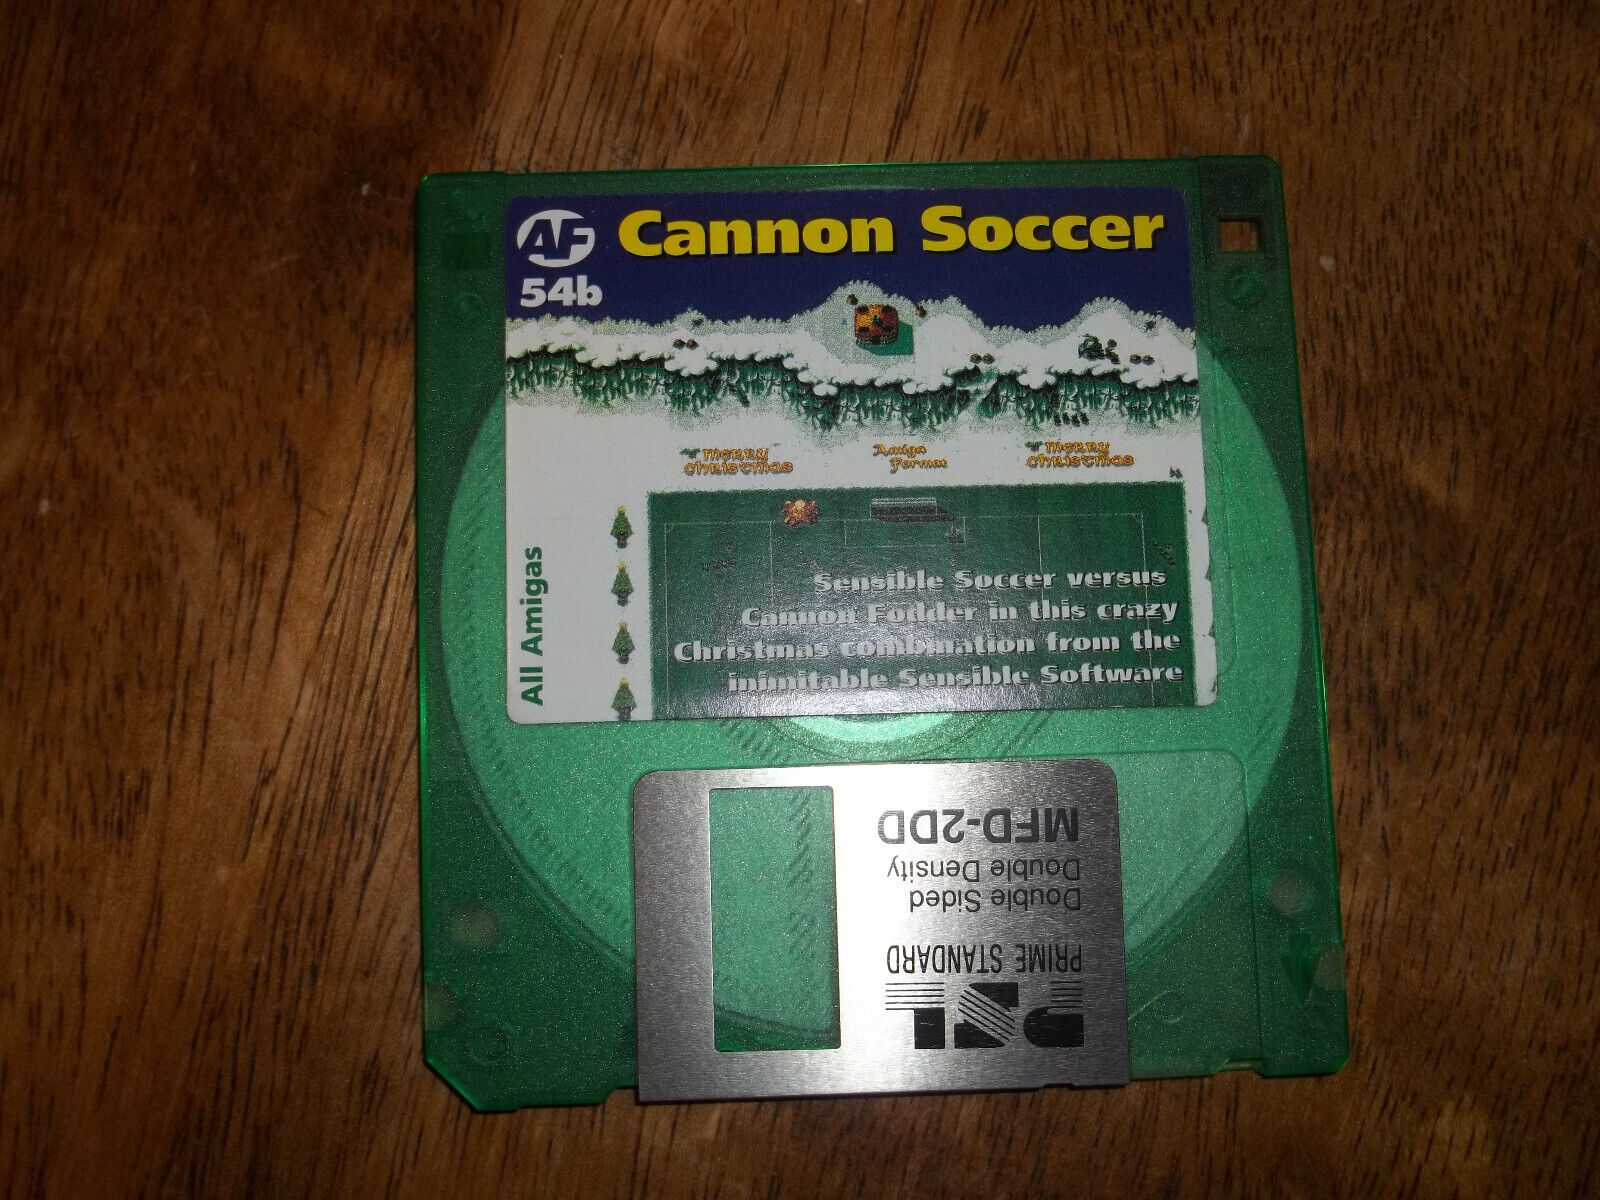 Amiga Cannon Soccer Game Disc, Very Rare Christmas Amiga Format Disk